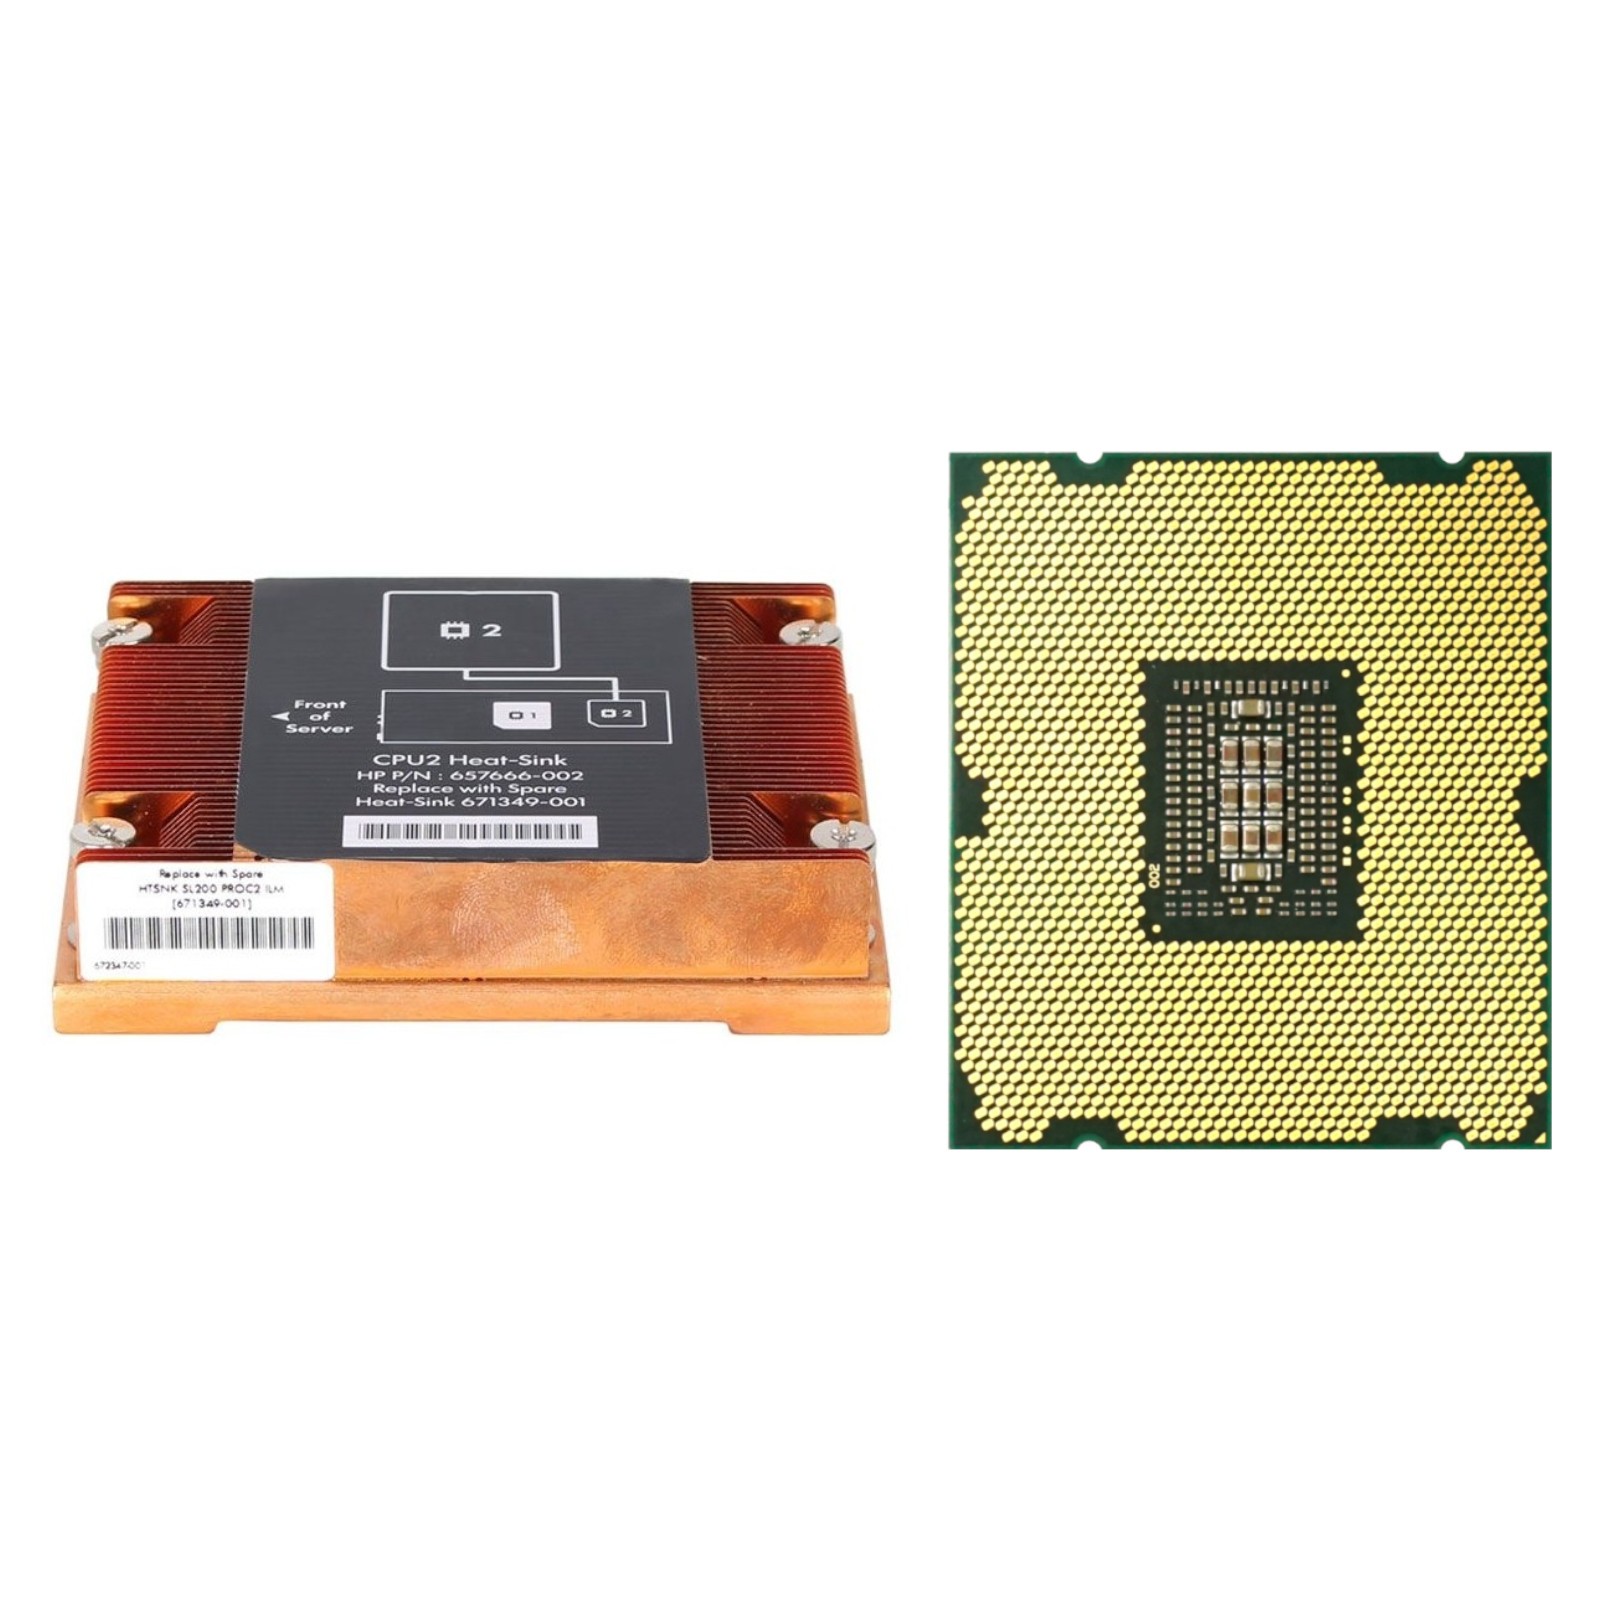 HP (654406-B21) ProLiant SL230S G8 - Intel Xeon E5-2680 CPU2 Kit